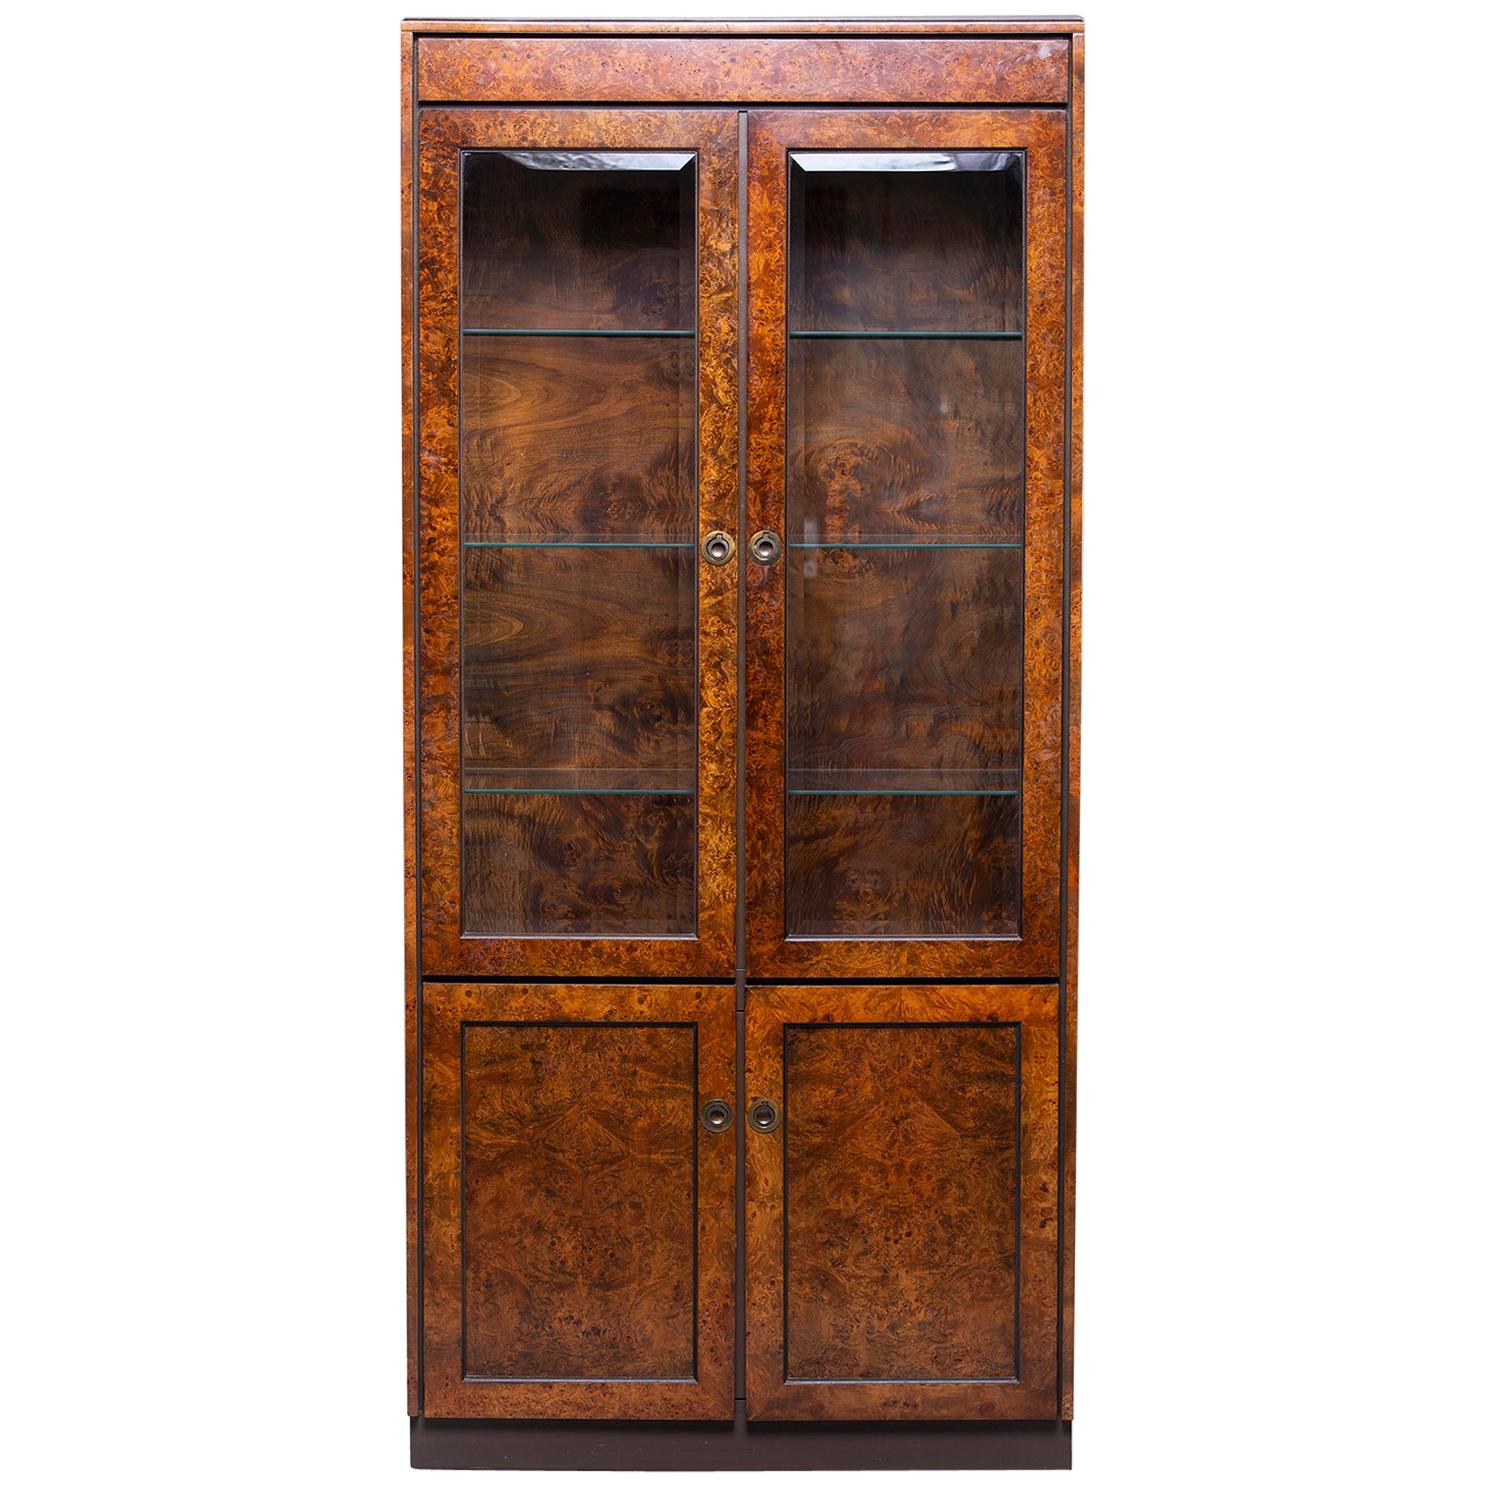 Widdicomb Midcentury Burled Olive Wood Cabinet with Glass Doors